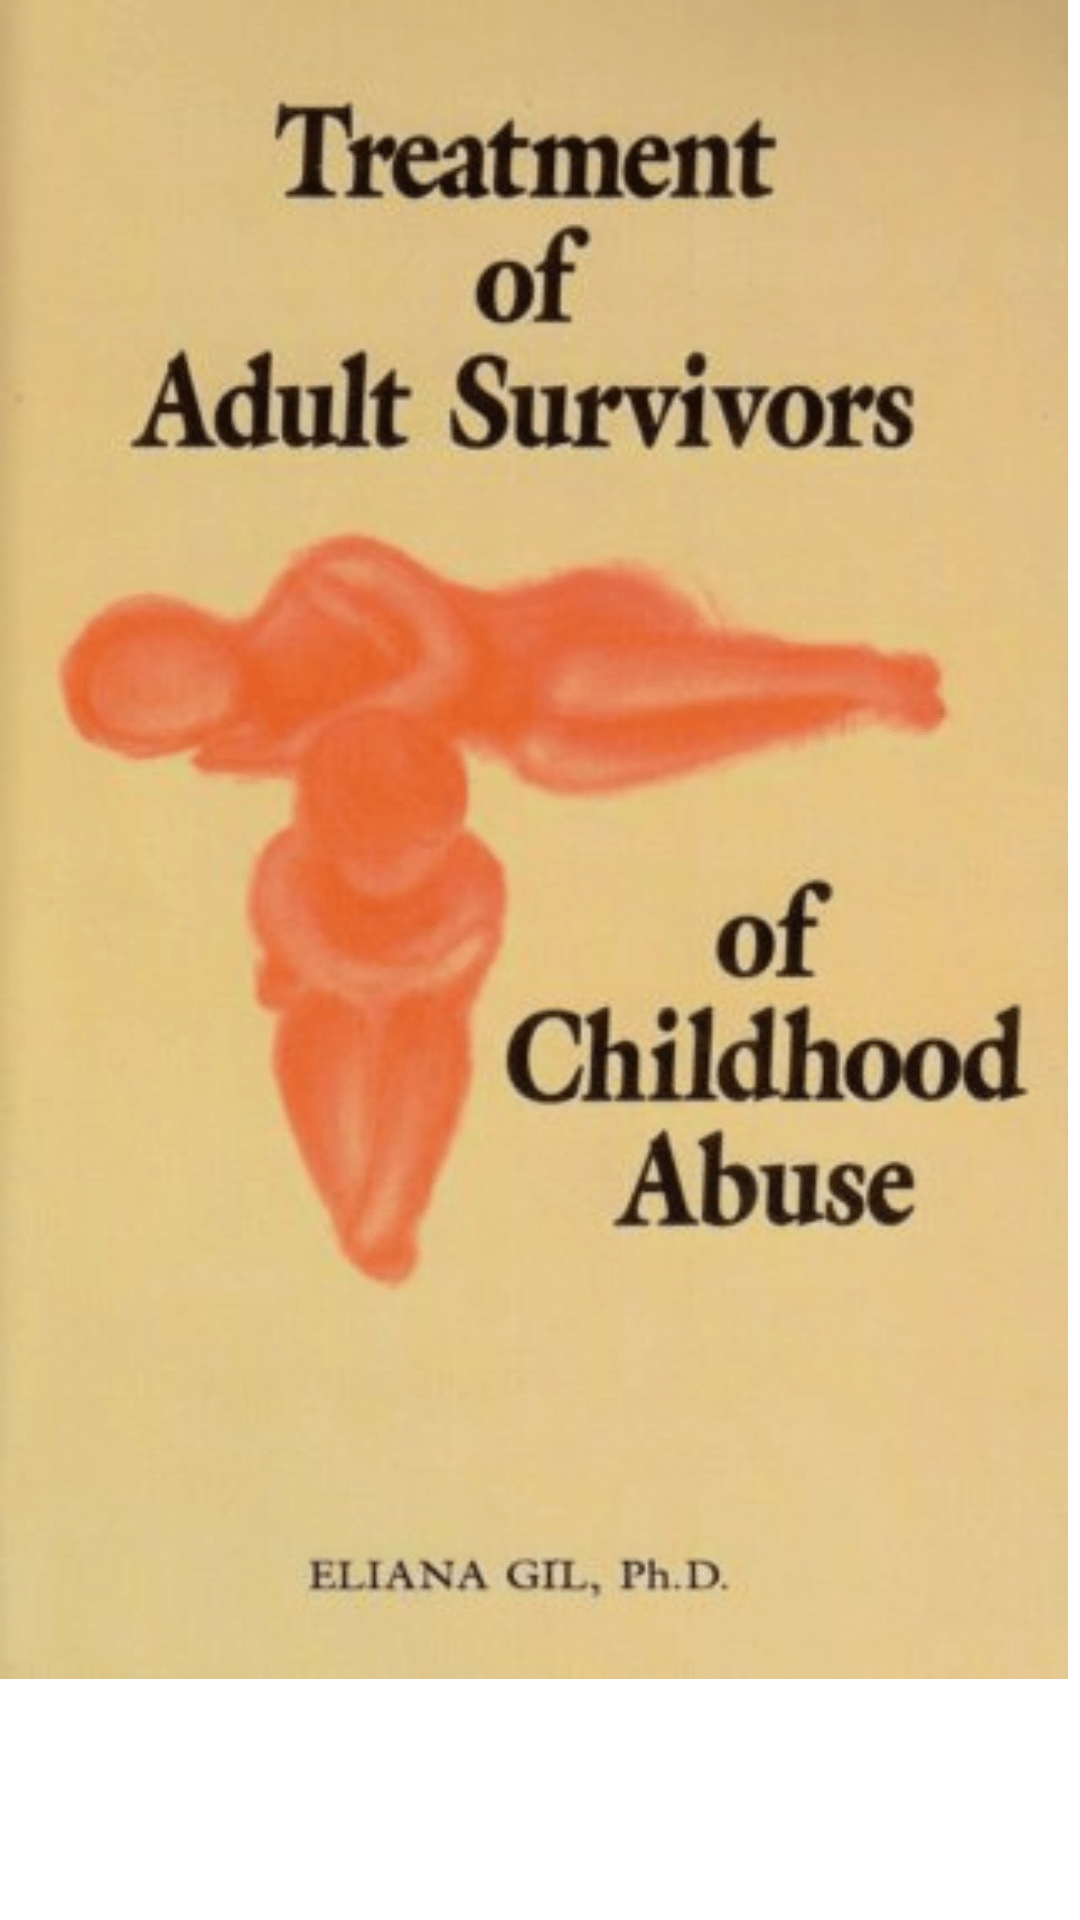 Treatment of Adult Survivors of Childhood Abuse